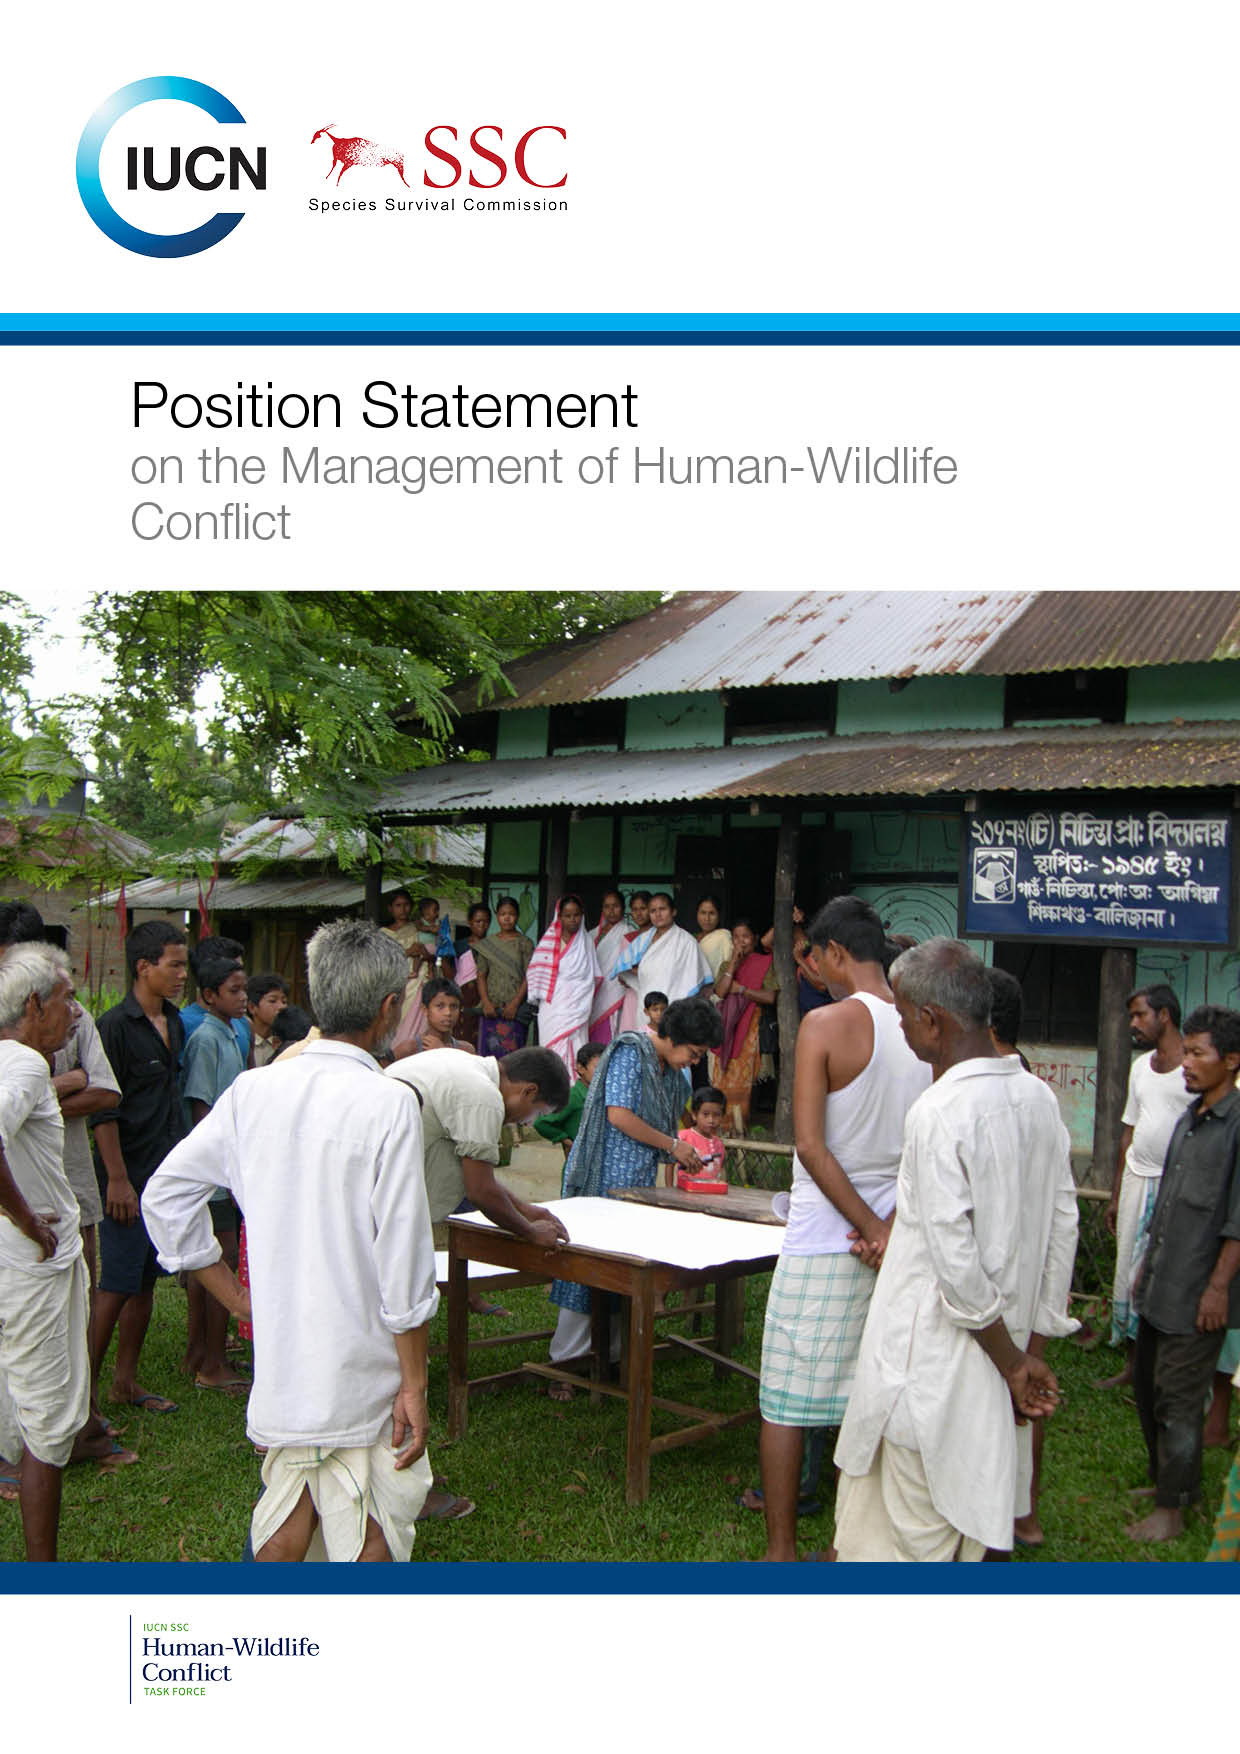 Management of Human-Wildlife Conflict